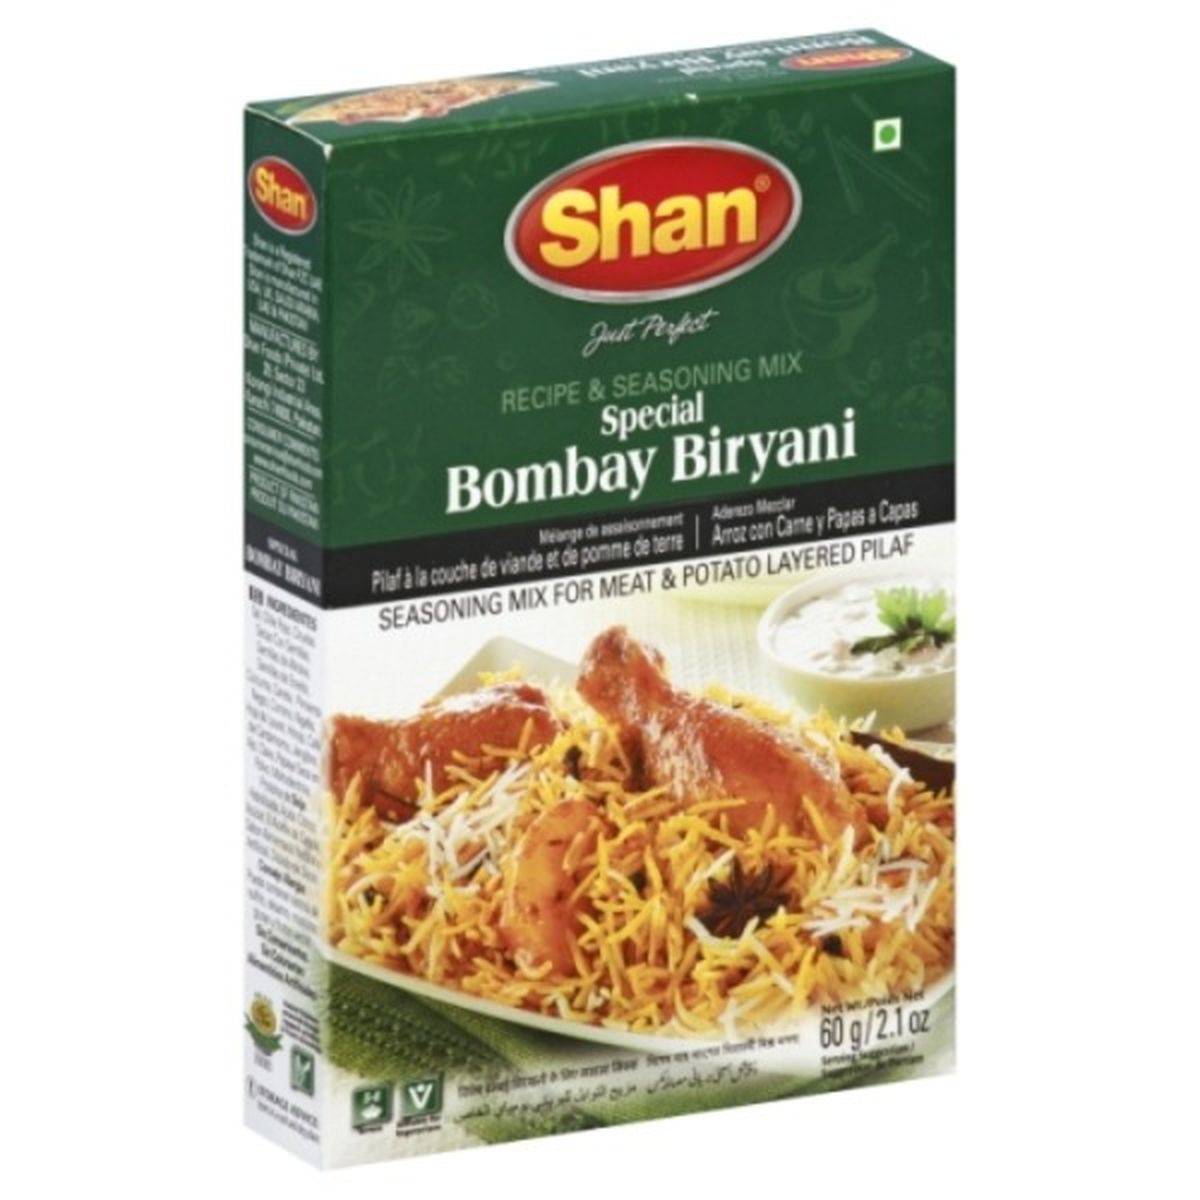 Calories in Shan Recipe & Seasoning Mix, Special Bombay Biryani